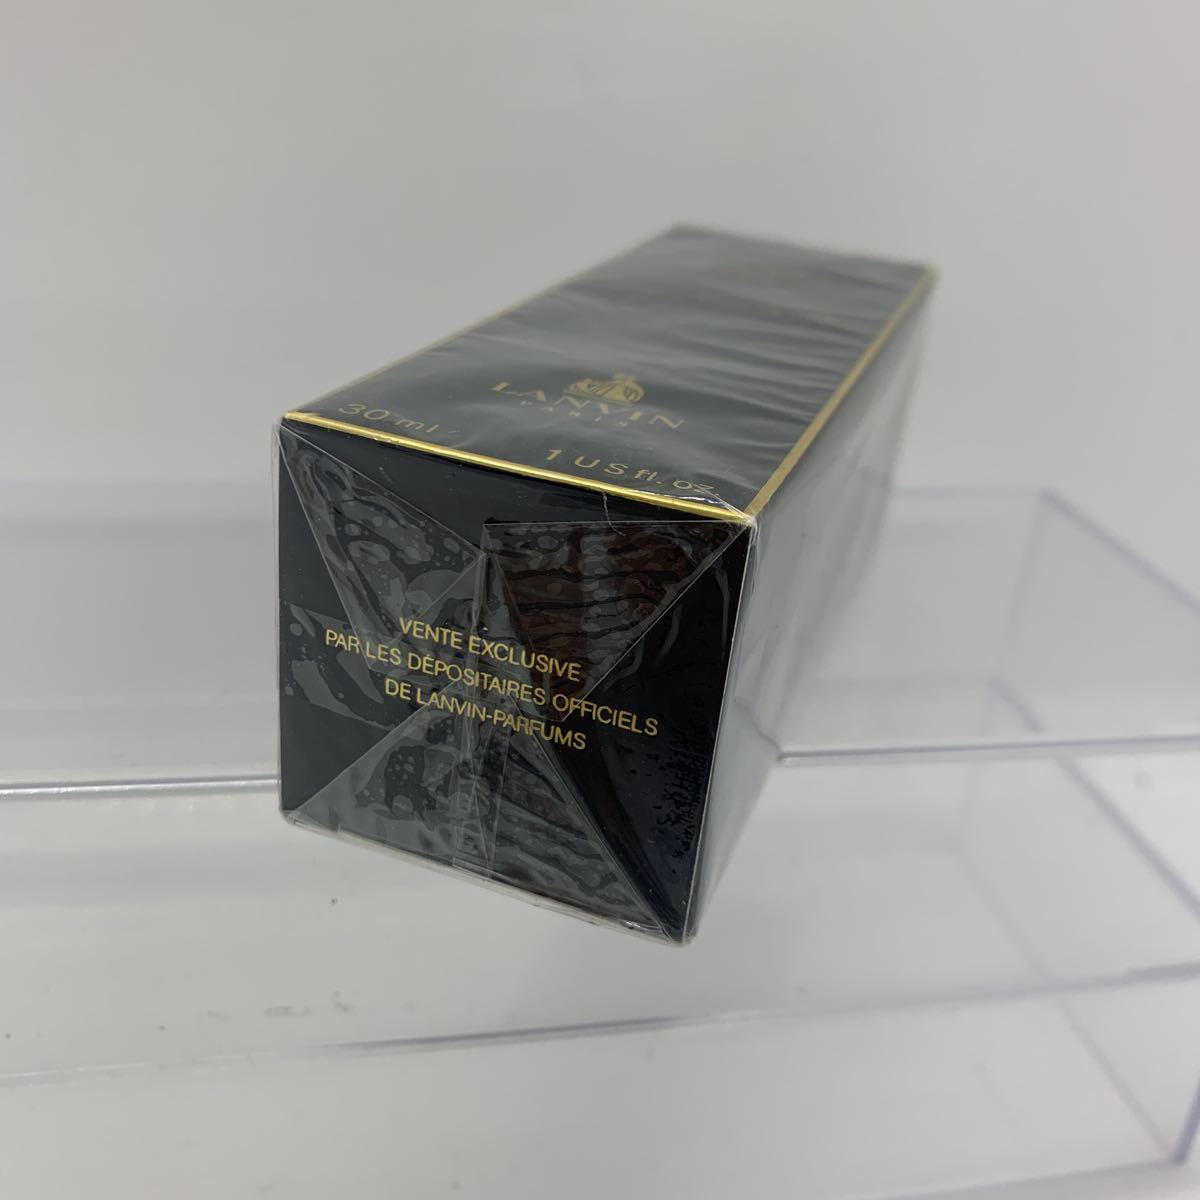  new goods unused unopened perfume LANVIN Lanvin EAU ARPEGE 30ml 2103A2X